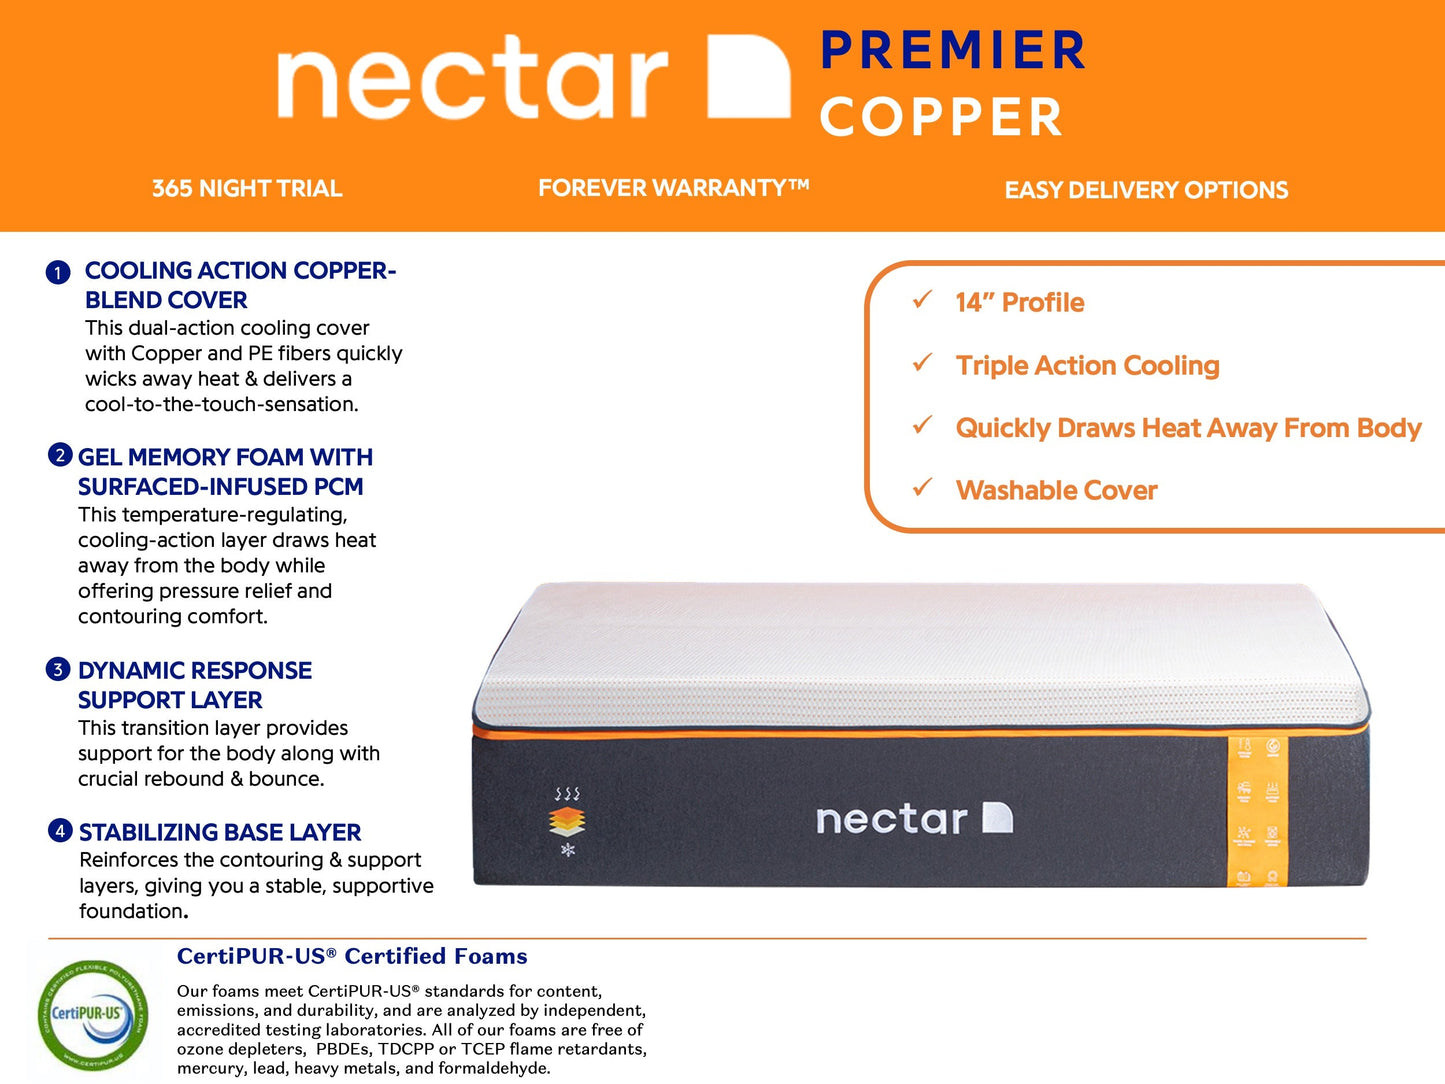 Nectar Premier Copper 14" Memory Foam Mattress